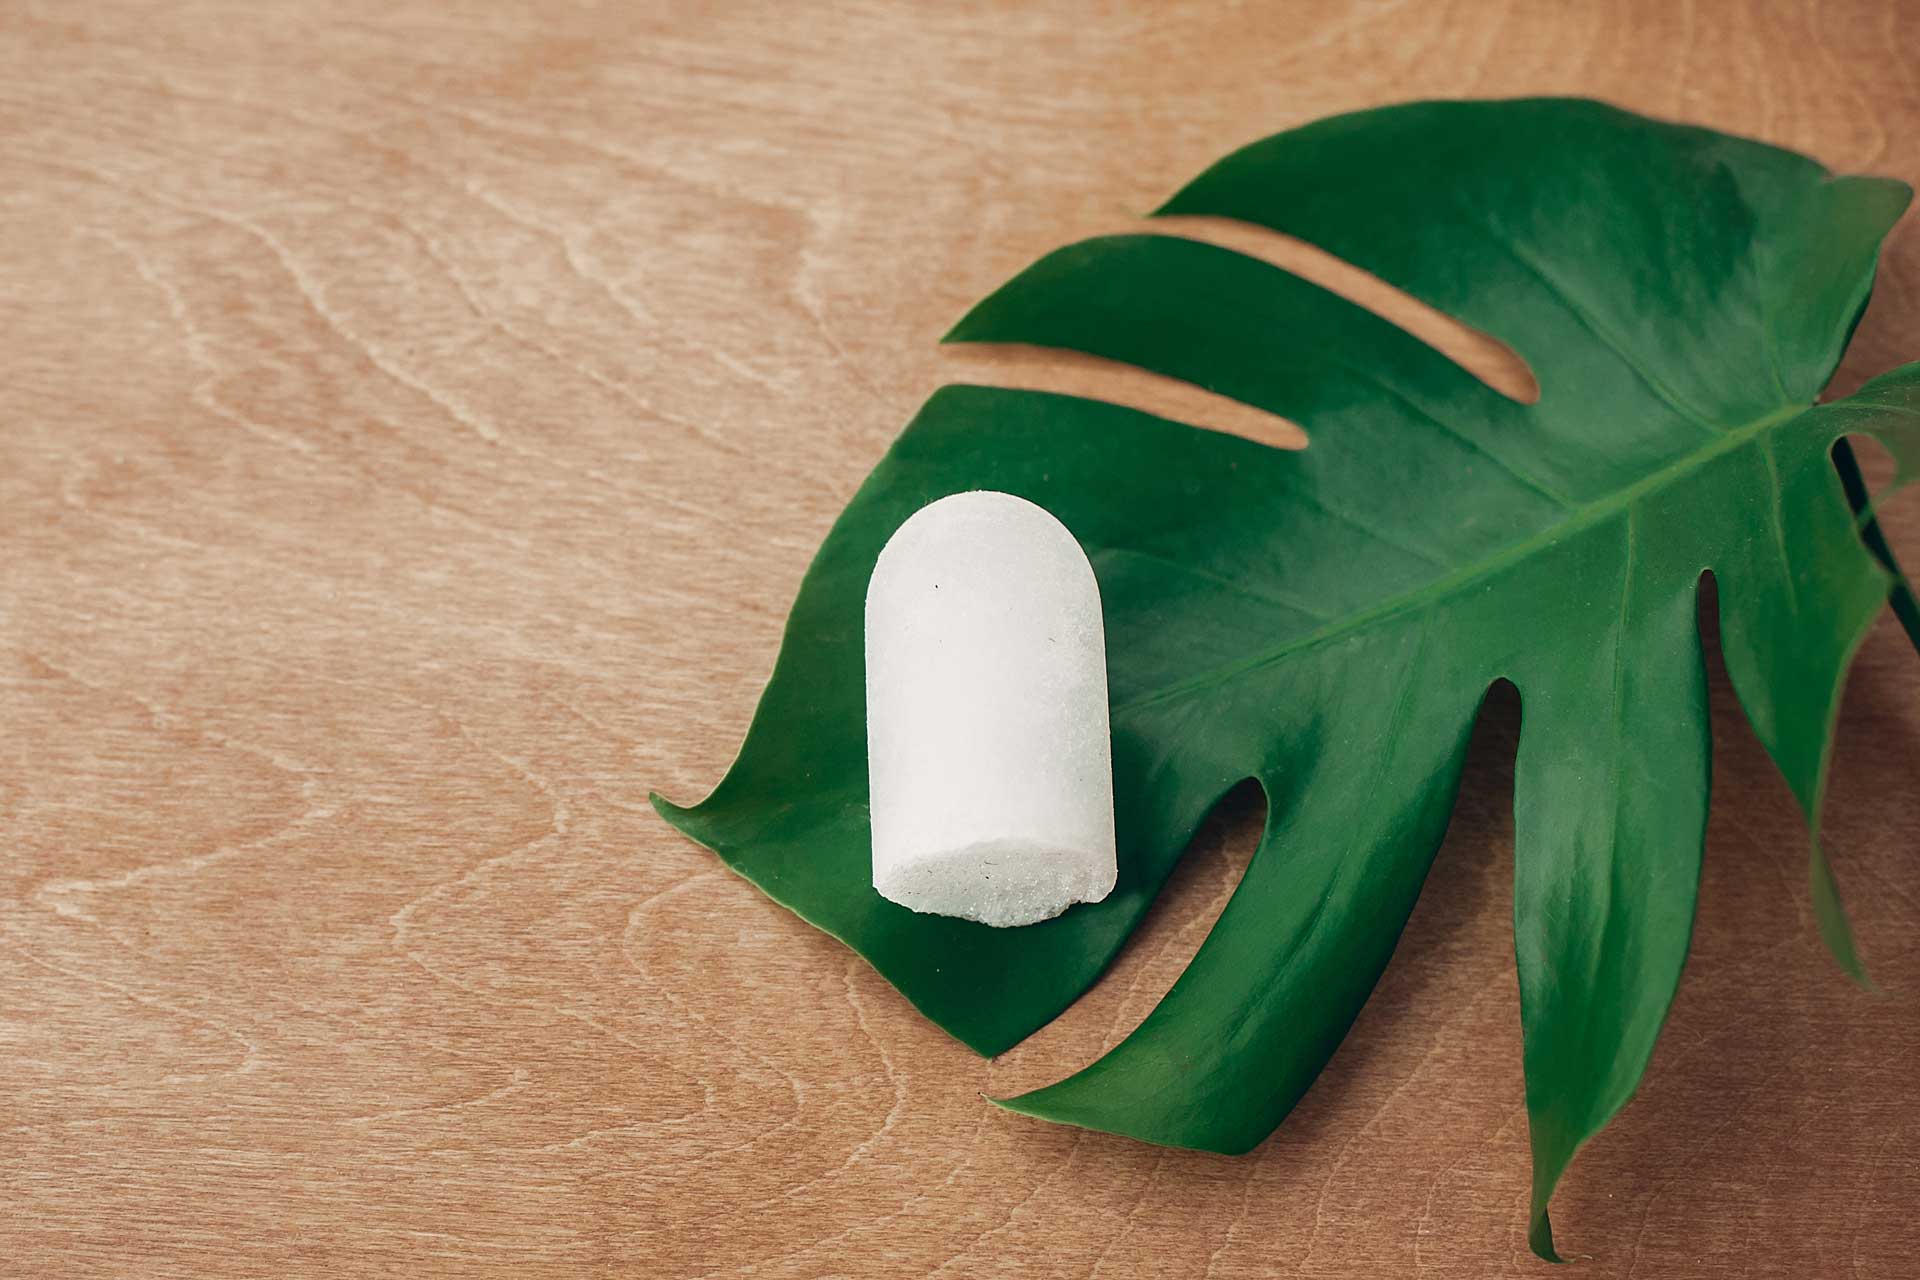 White plastic free deodorant bar on top of large green leaf.